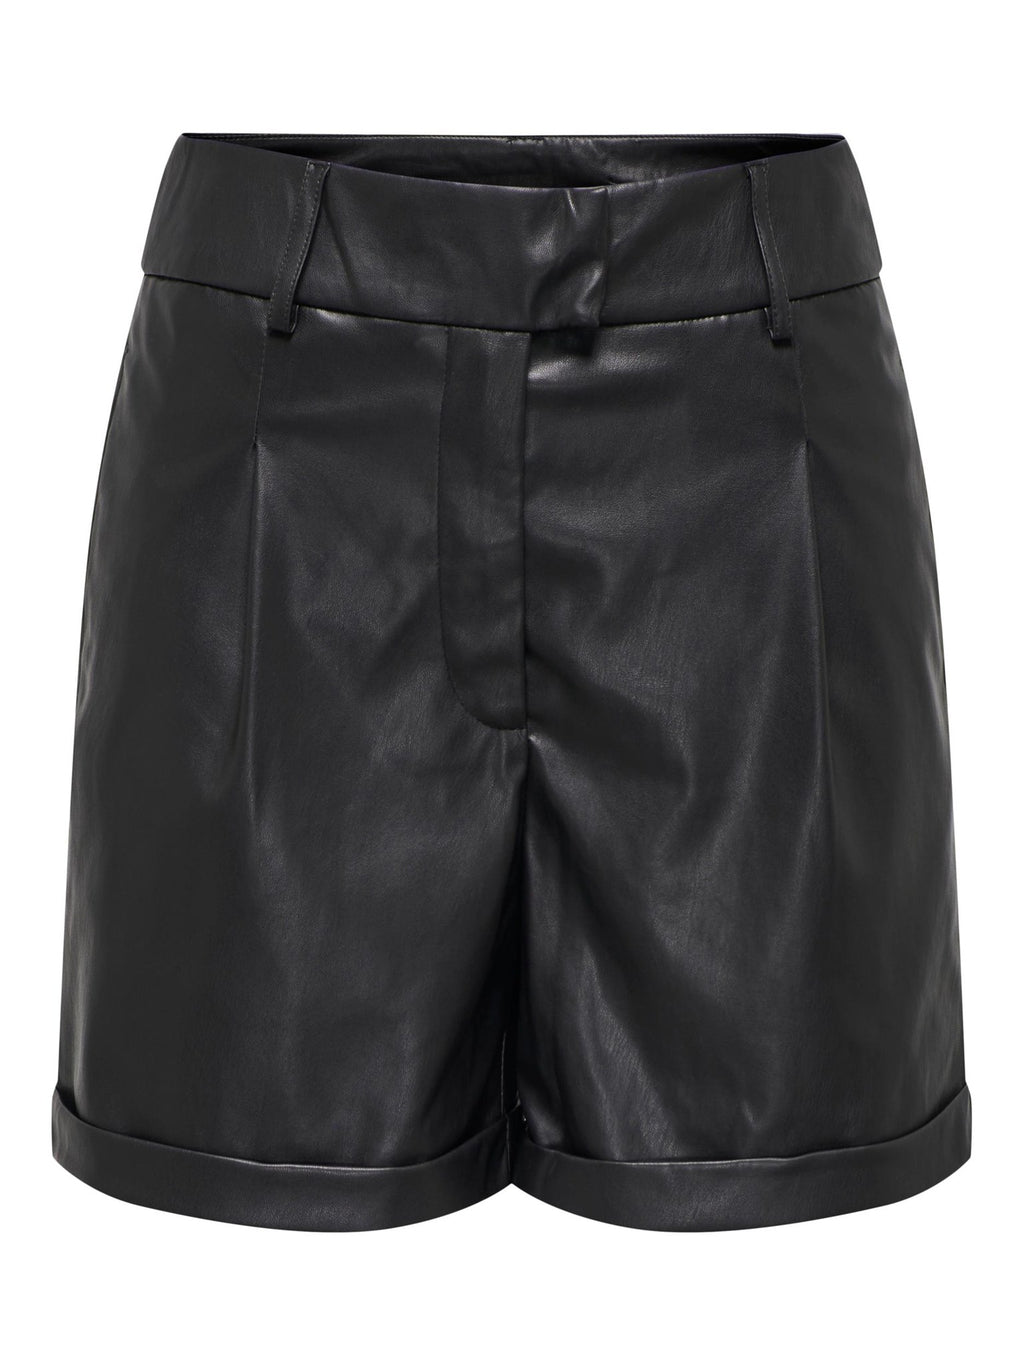 Emy Faux Leather Shorts - Black